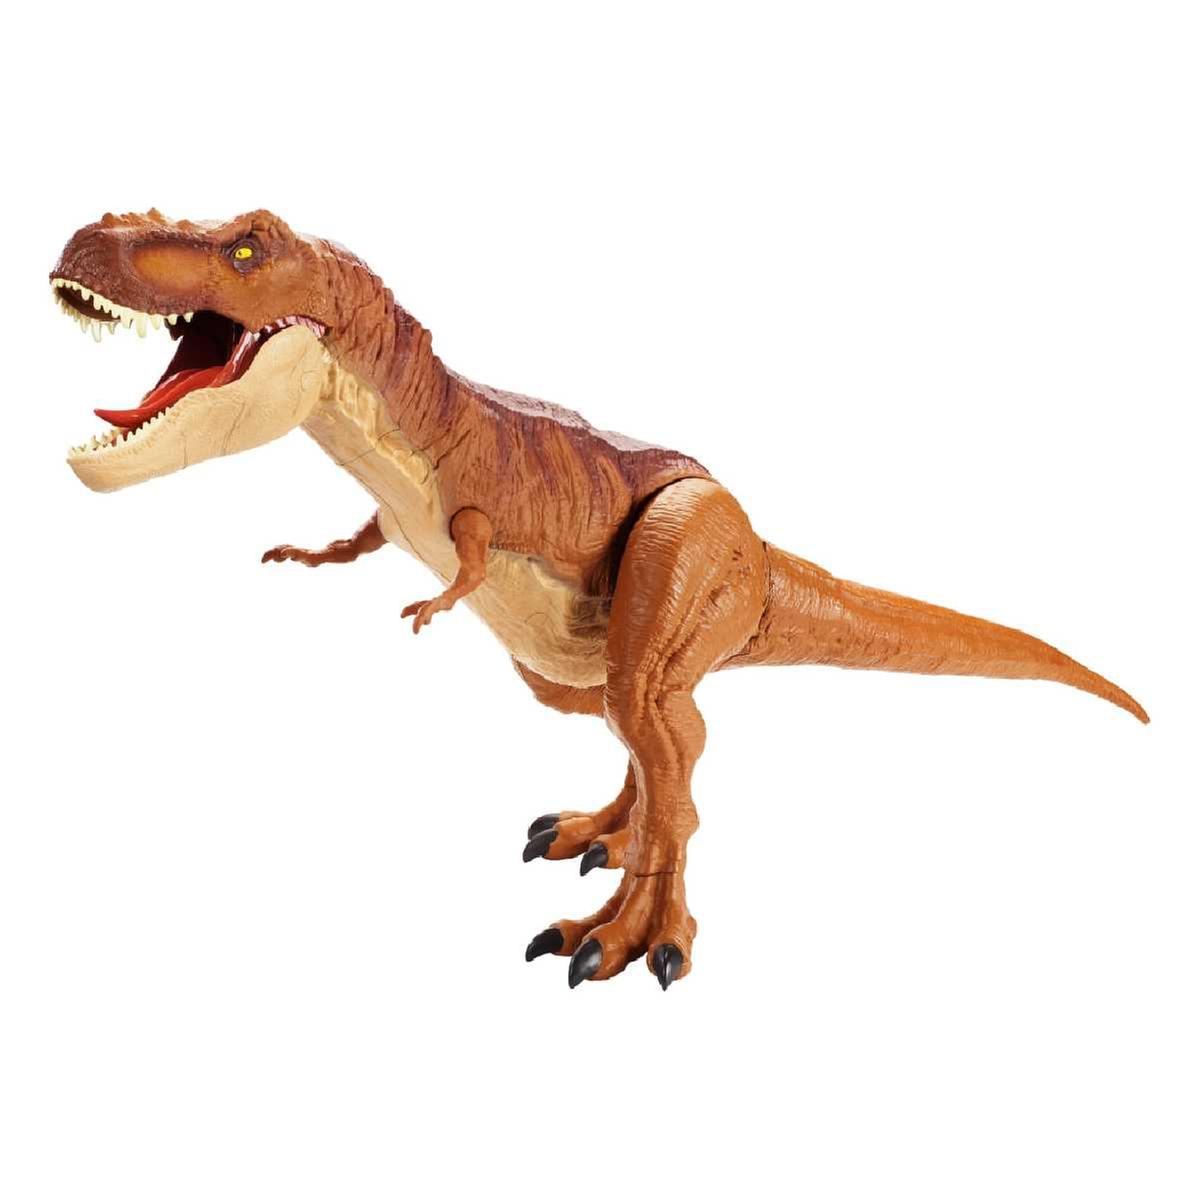 Jurassic World - Tyrannosaurus Rex Supercolosal | Jurassic World |  Toys"R"Us España